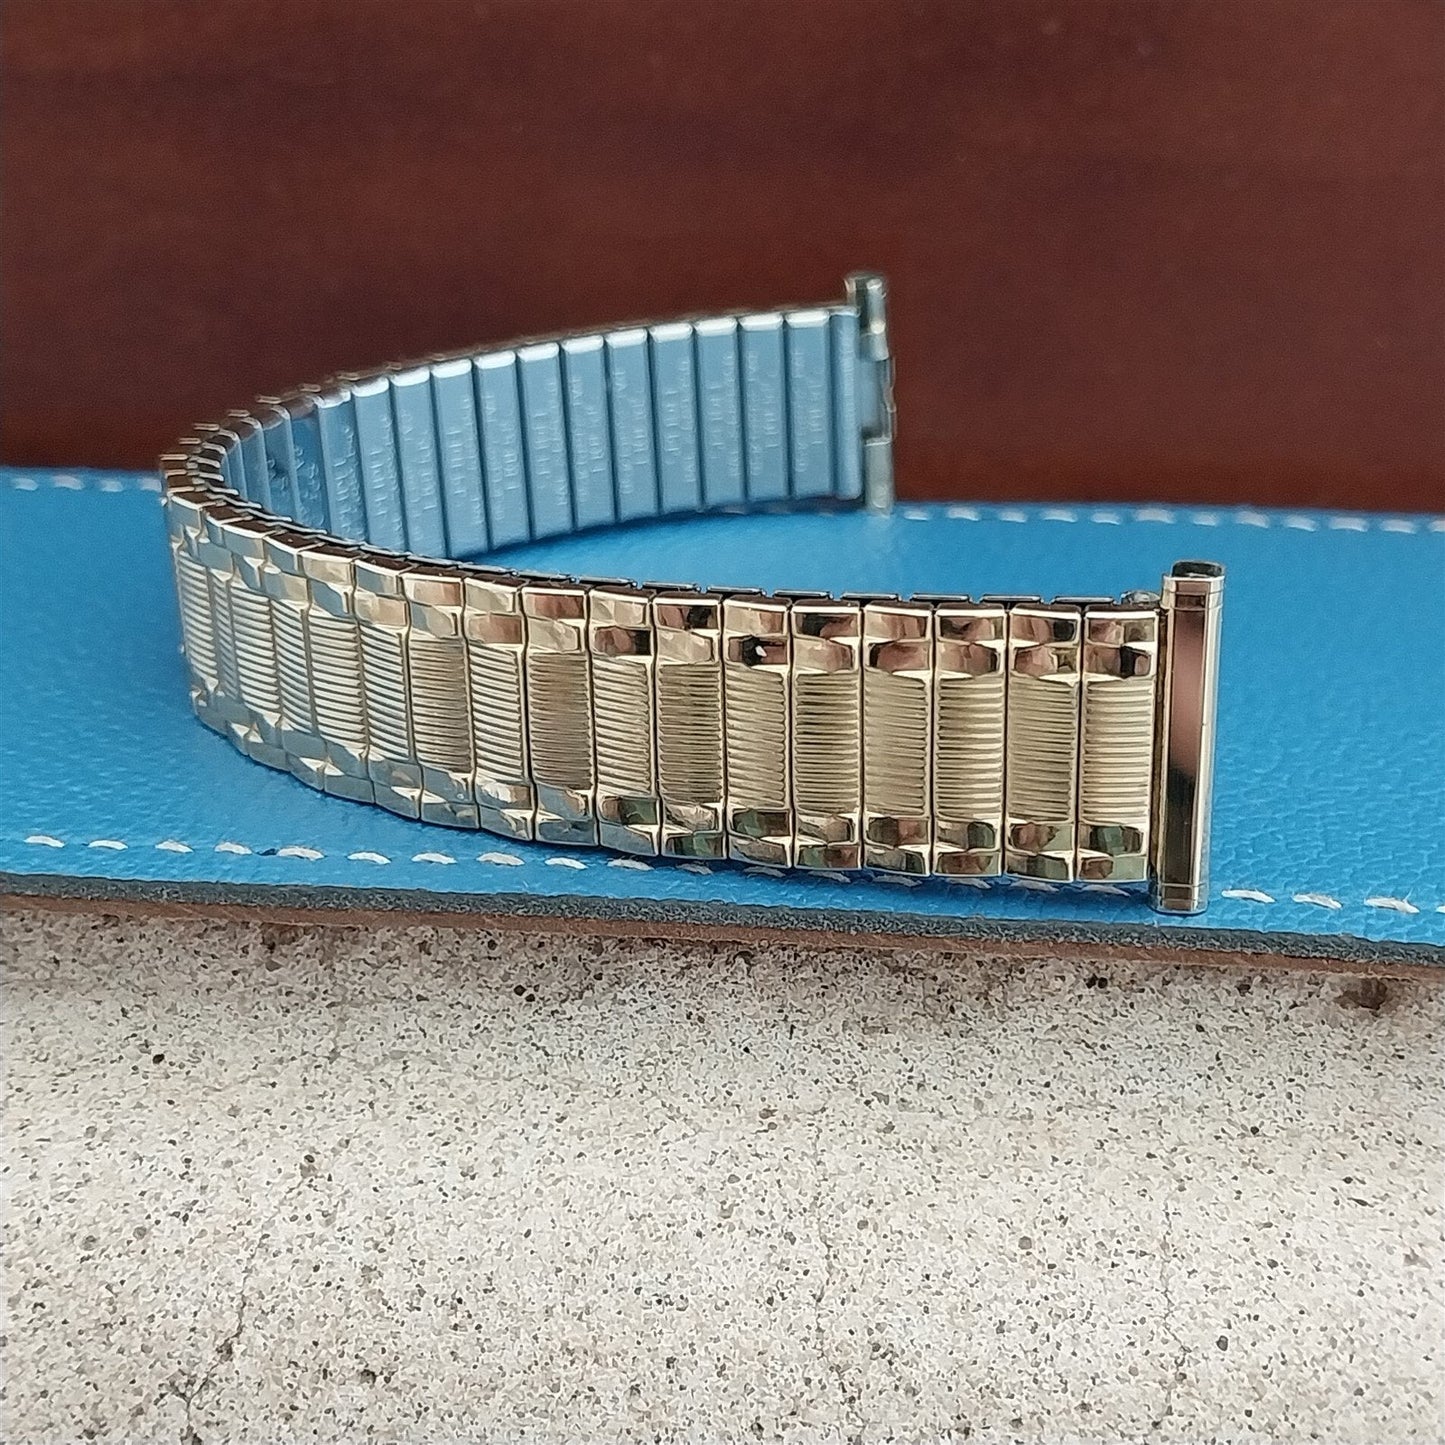 19mm 18mm 16mm 1964 10k Gold-Filled Speidel Colossus Unused Vintage Watch Band